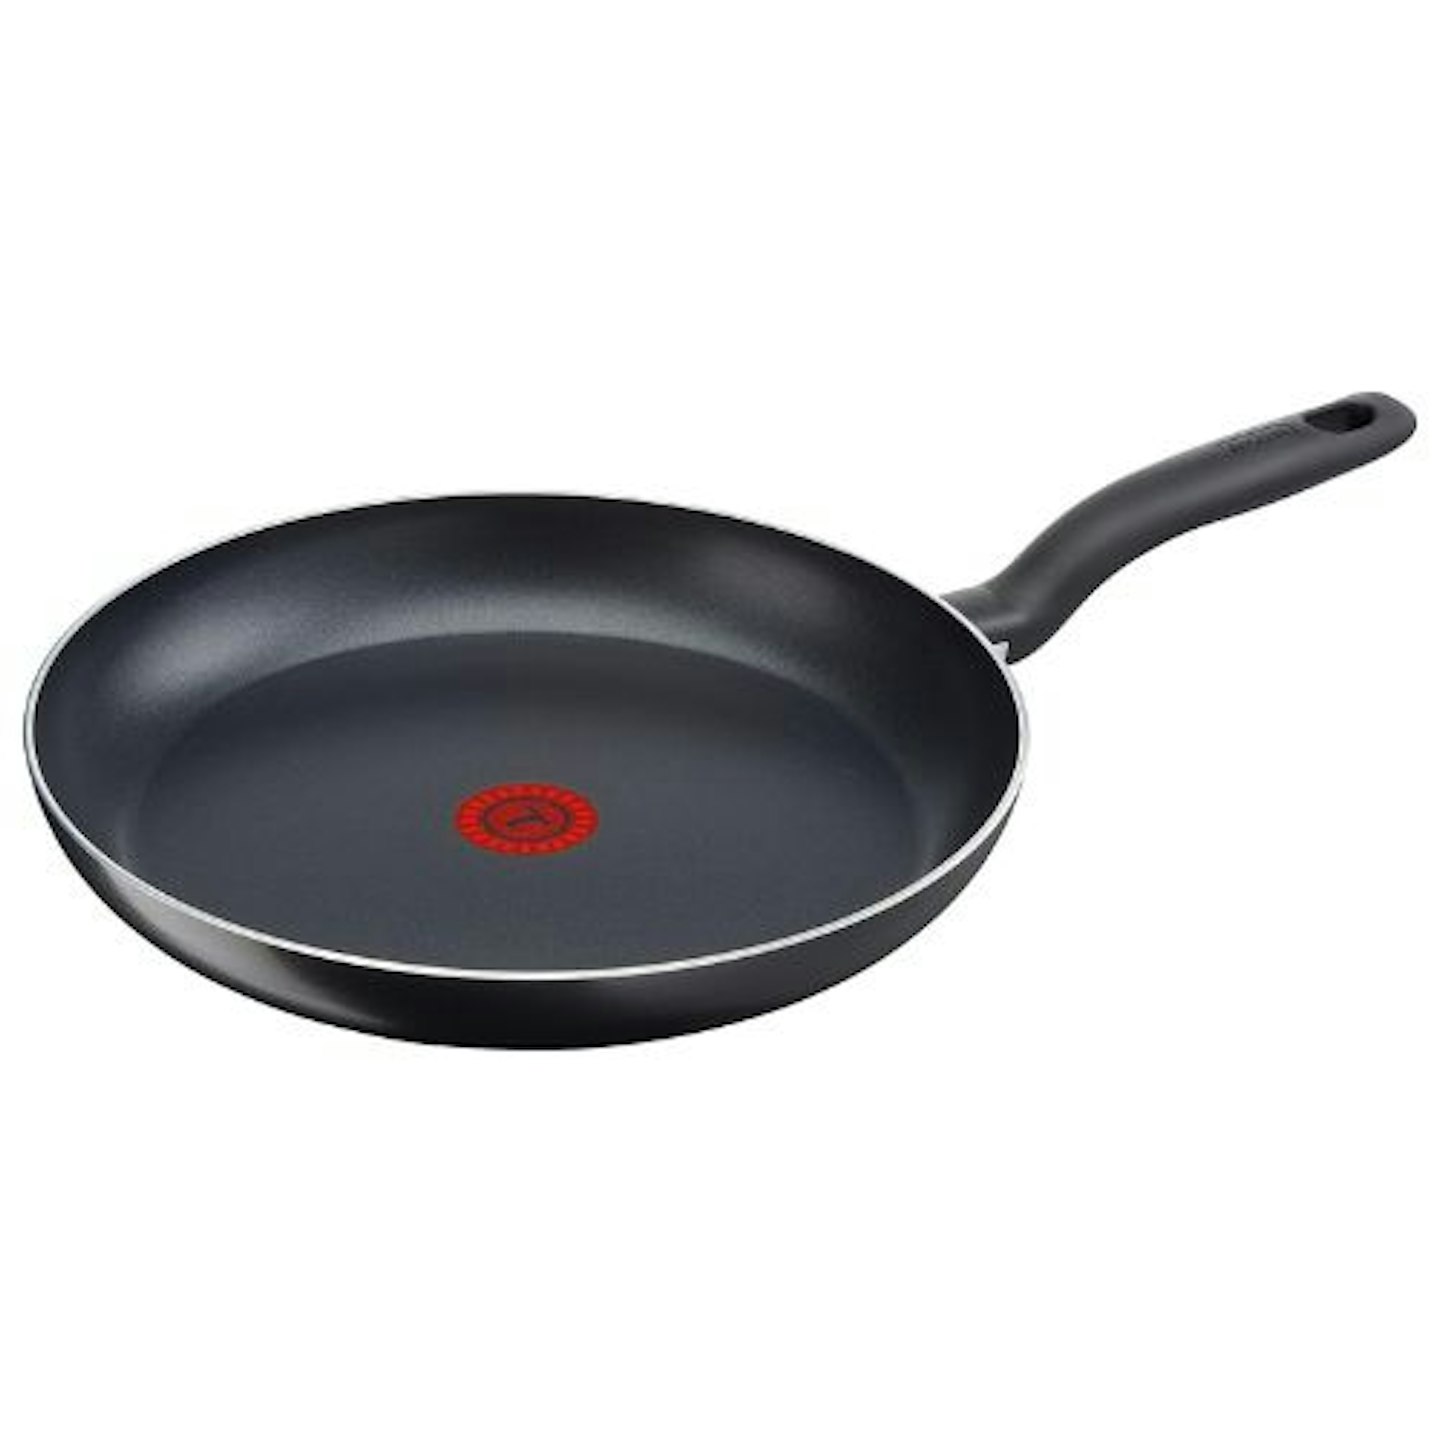 Tefal B3430842 Precision Plus Aluminium 32cm Non-Stick Frying pan, Black, Made In France